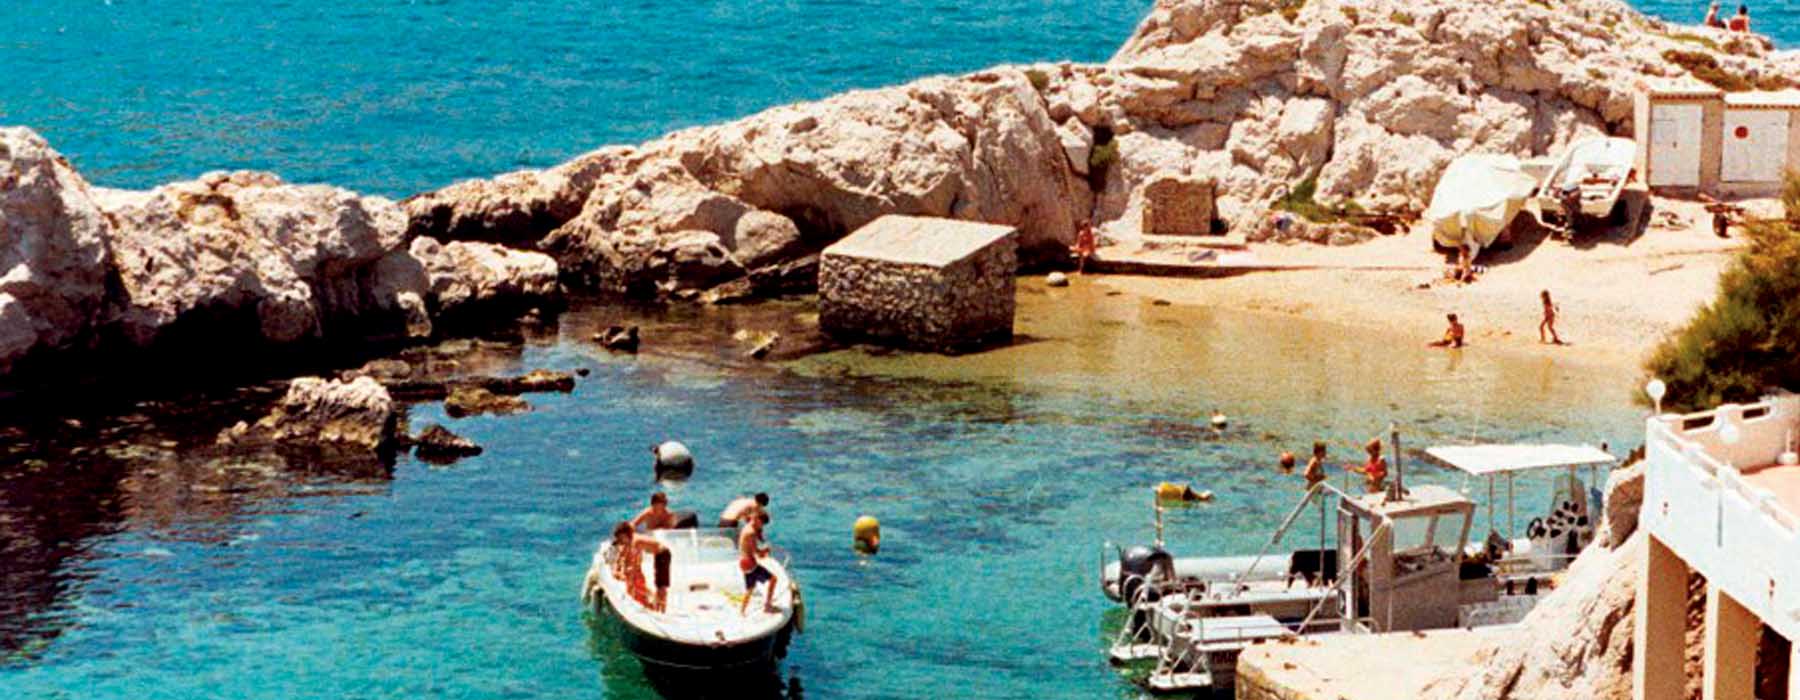 Provence & The Mediterranean Coast<br class="hidden-md hidden-lg" /> Holidays